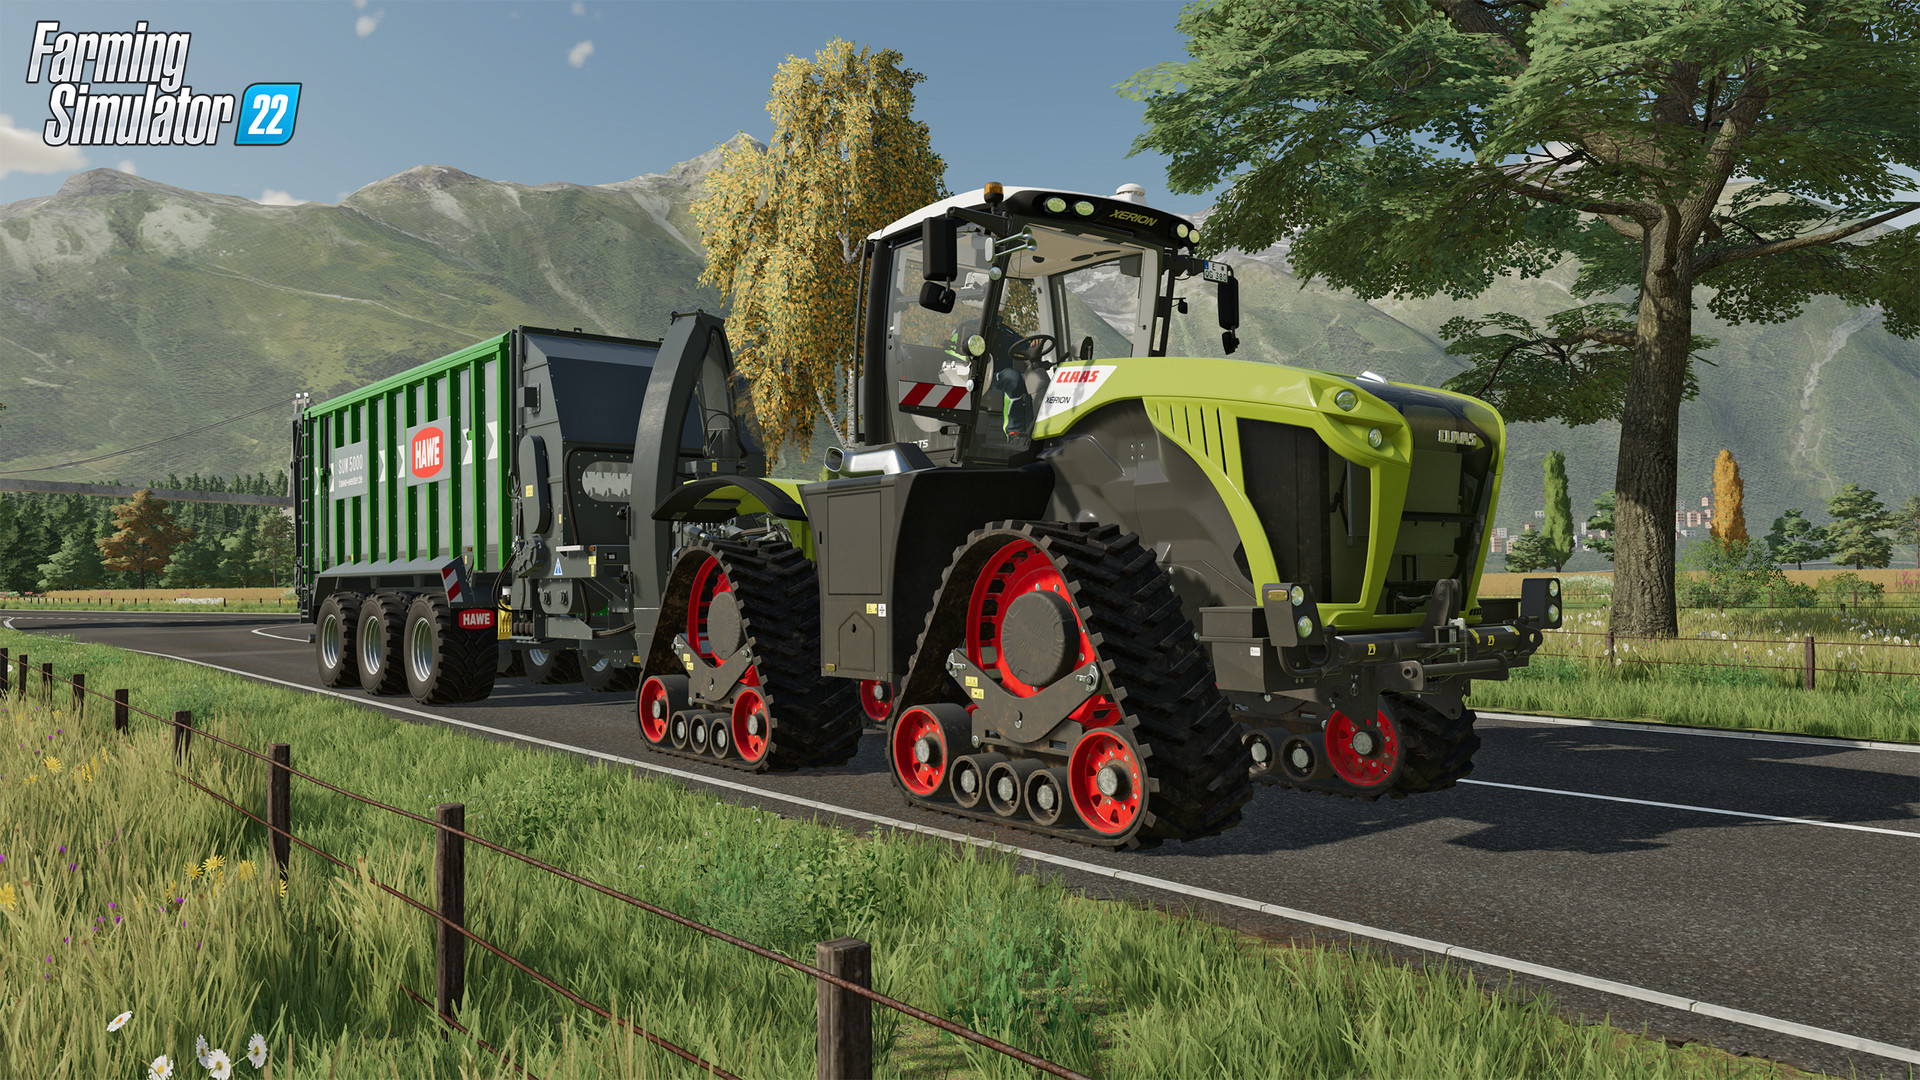 Save 30% on Farming Simulator 22 on Steam